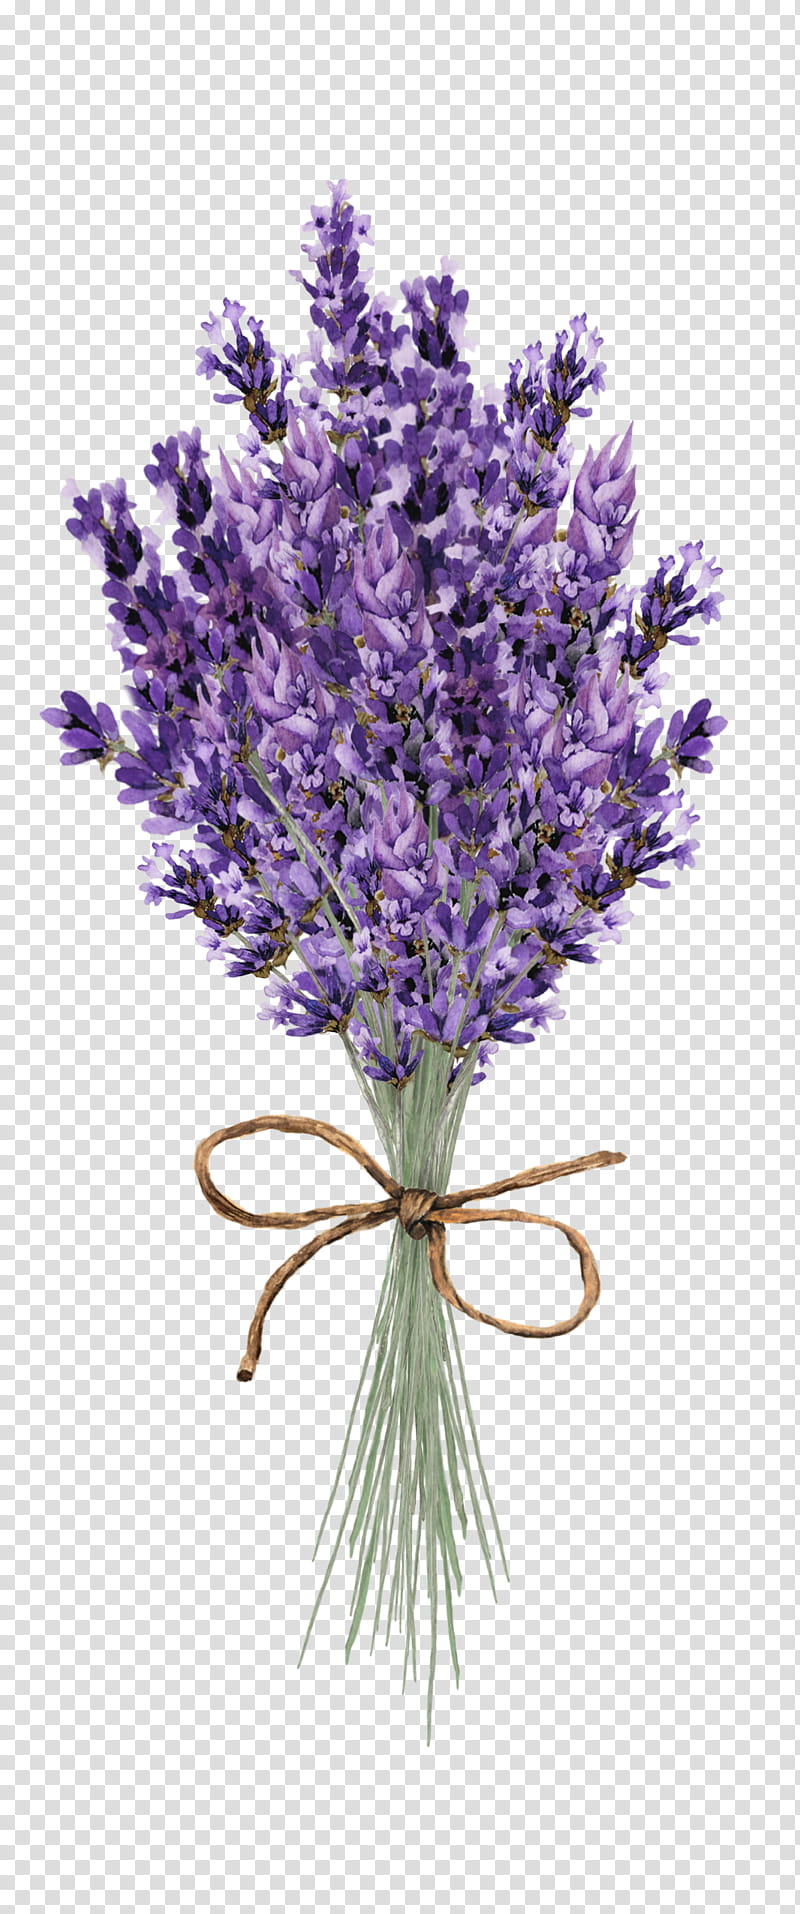 Wedding Invitation Flowers, Lavender, Painting, Gift, Color, Number, Blue, Purple transparent background PNG clipart